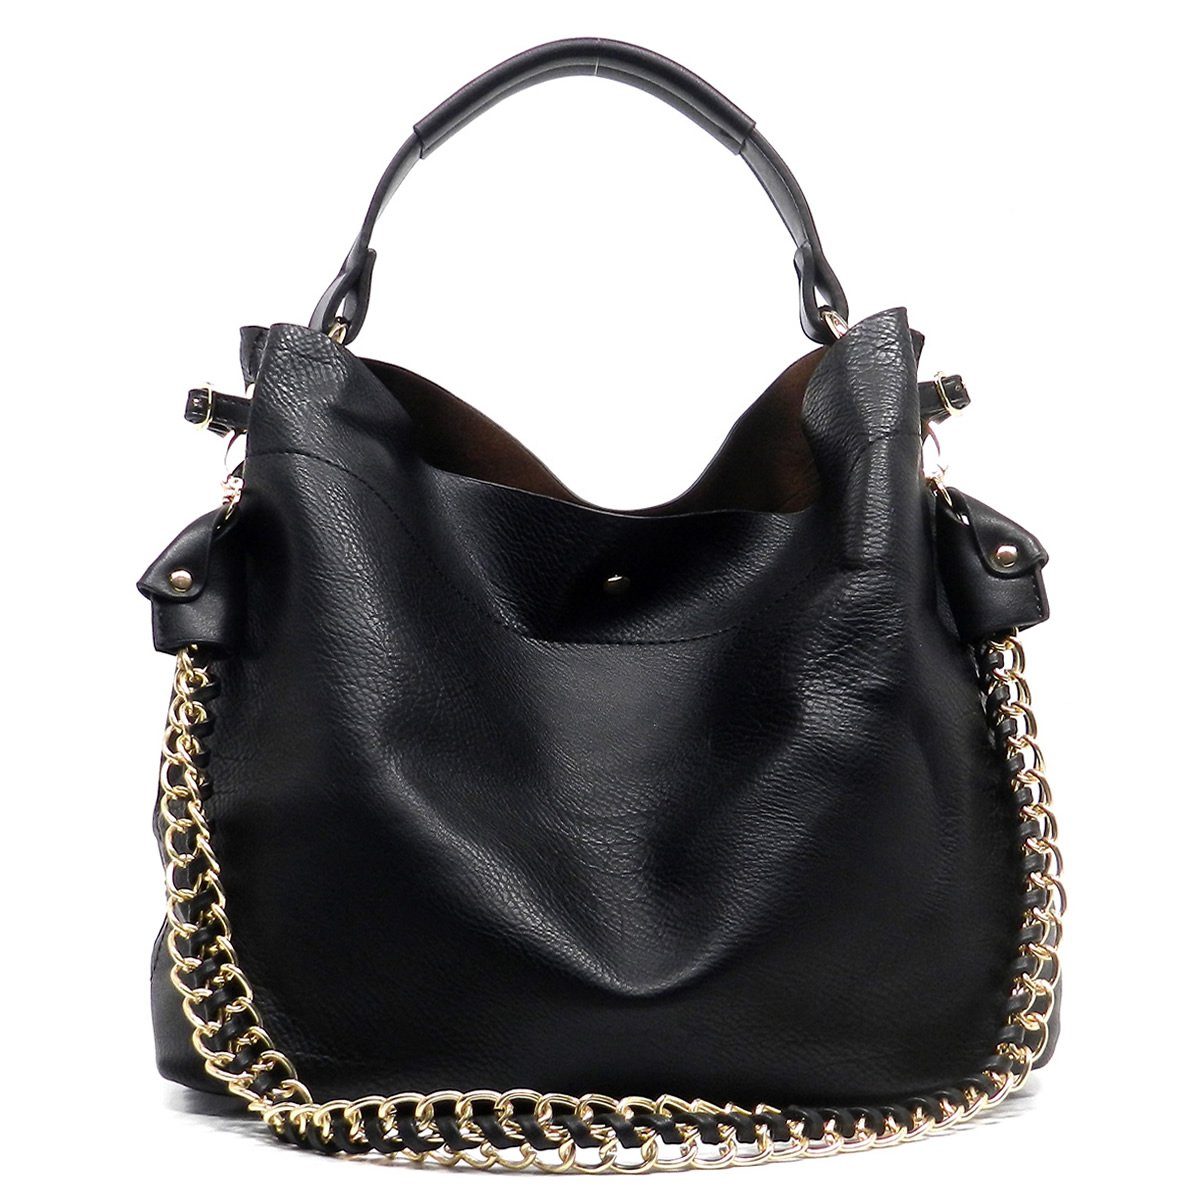 Janin-Handbag-Bucket-Style-Hobo-Shoulder-Bag-with-Big-Chain-Strap-2-in ...